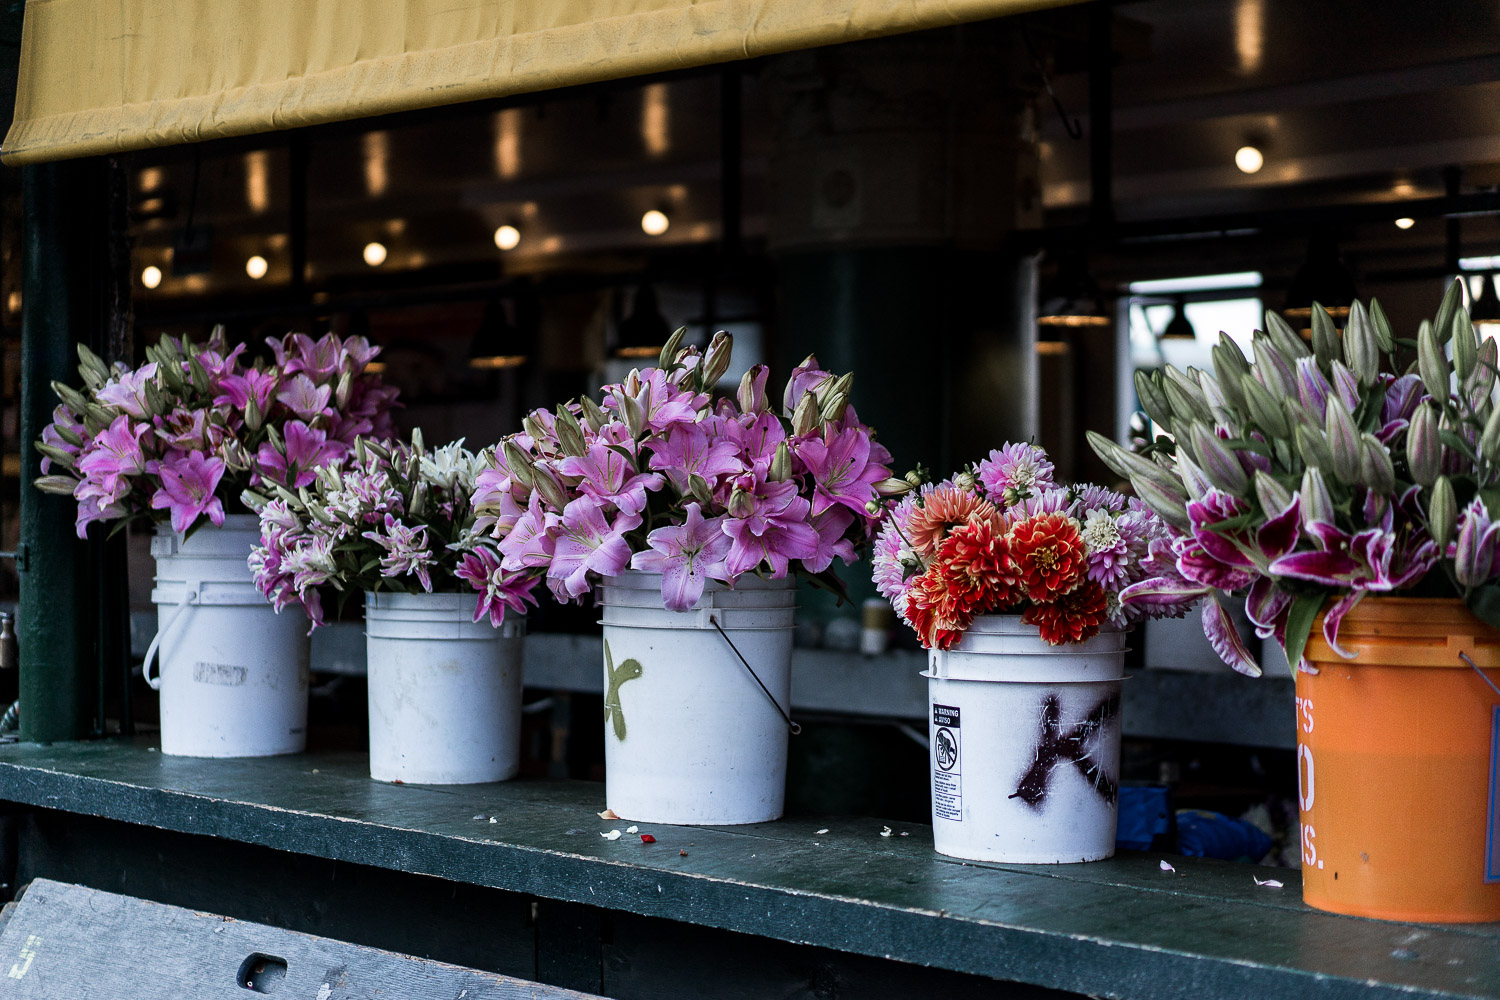 Public Market in Seattle showcases gorgeous flowers as it opens